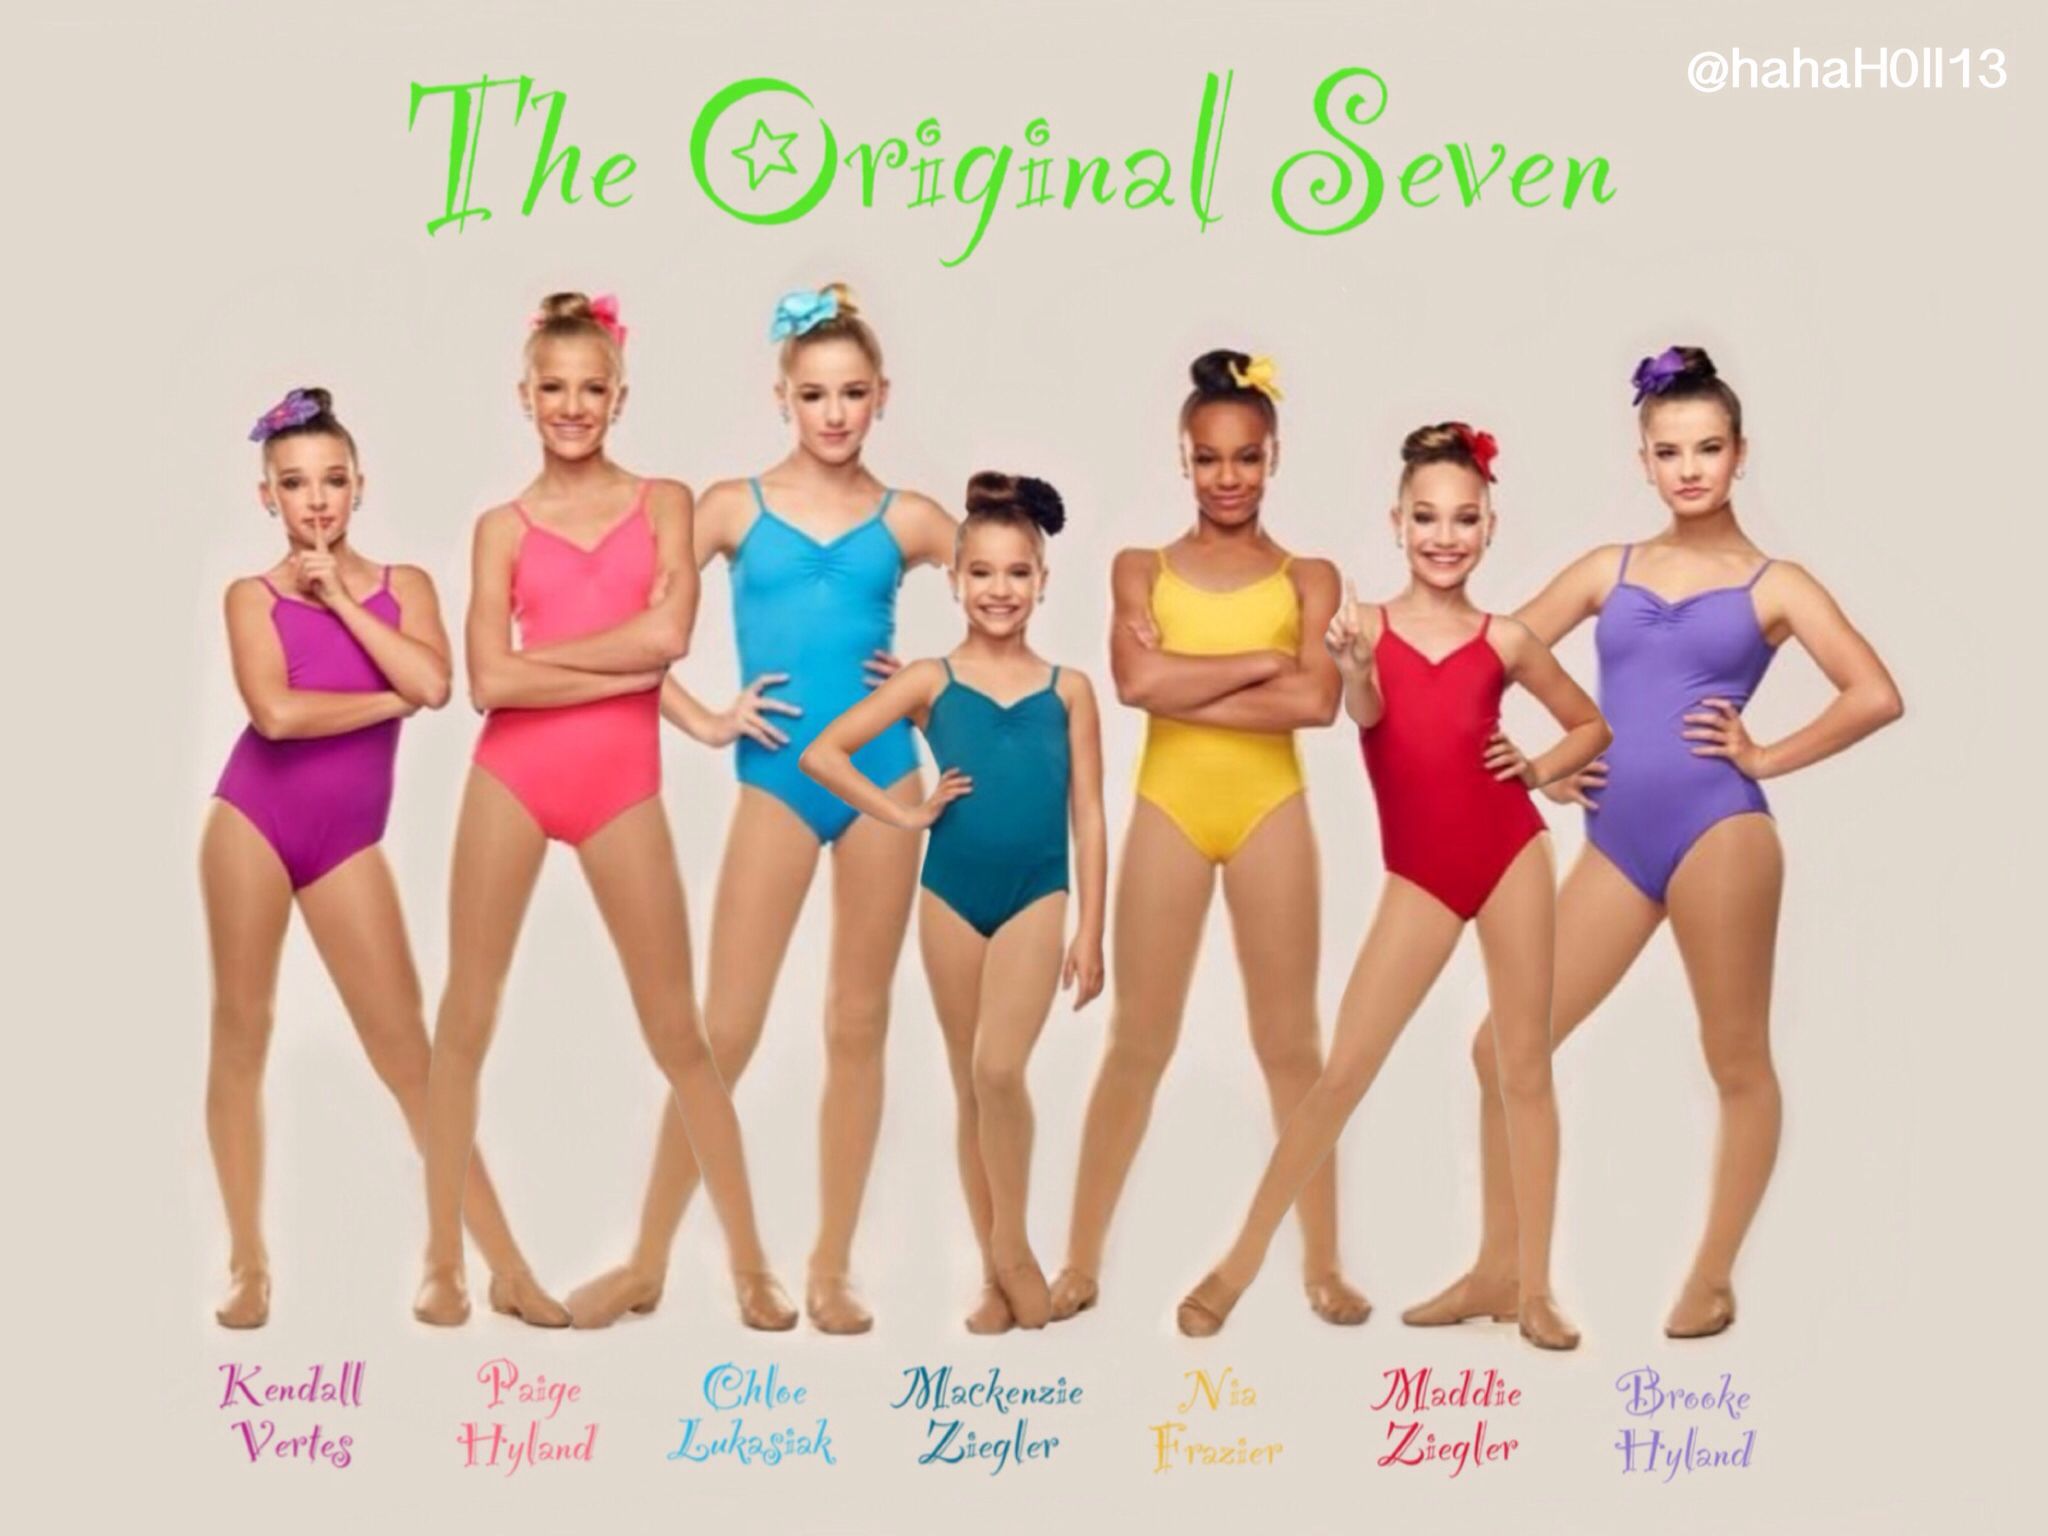 Dance Moms edit of the original seven: Kendall Vertes, Paige